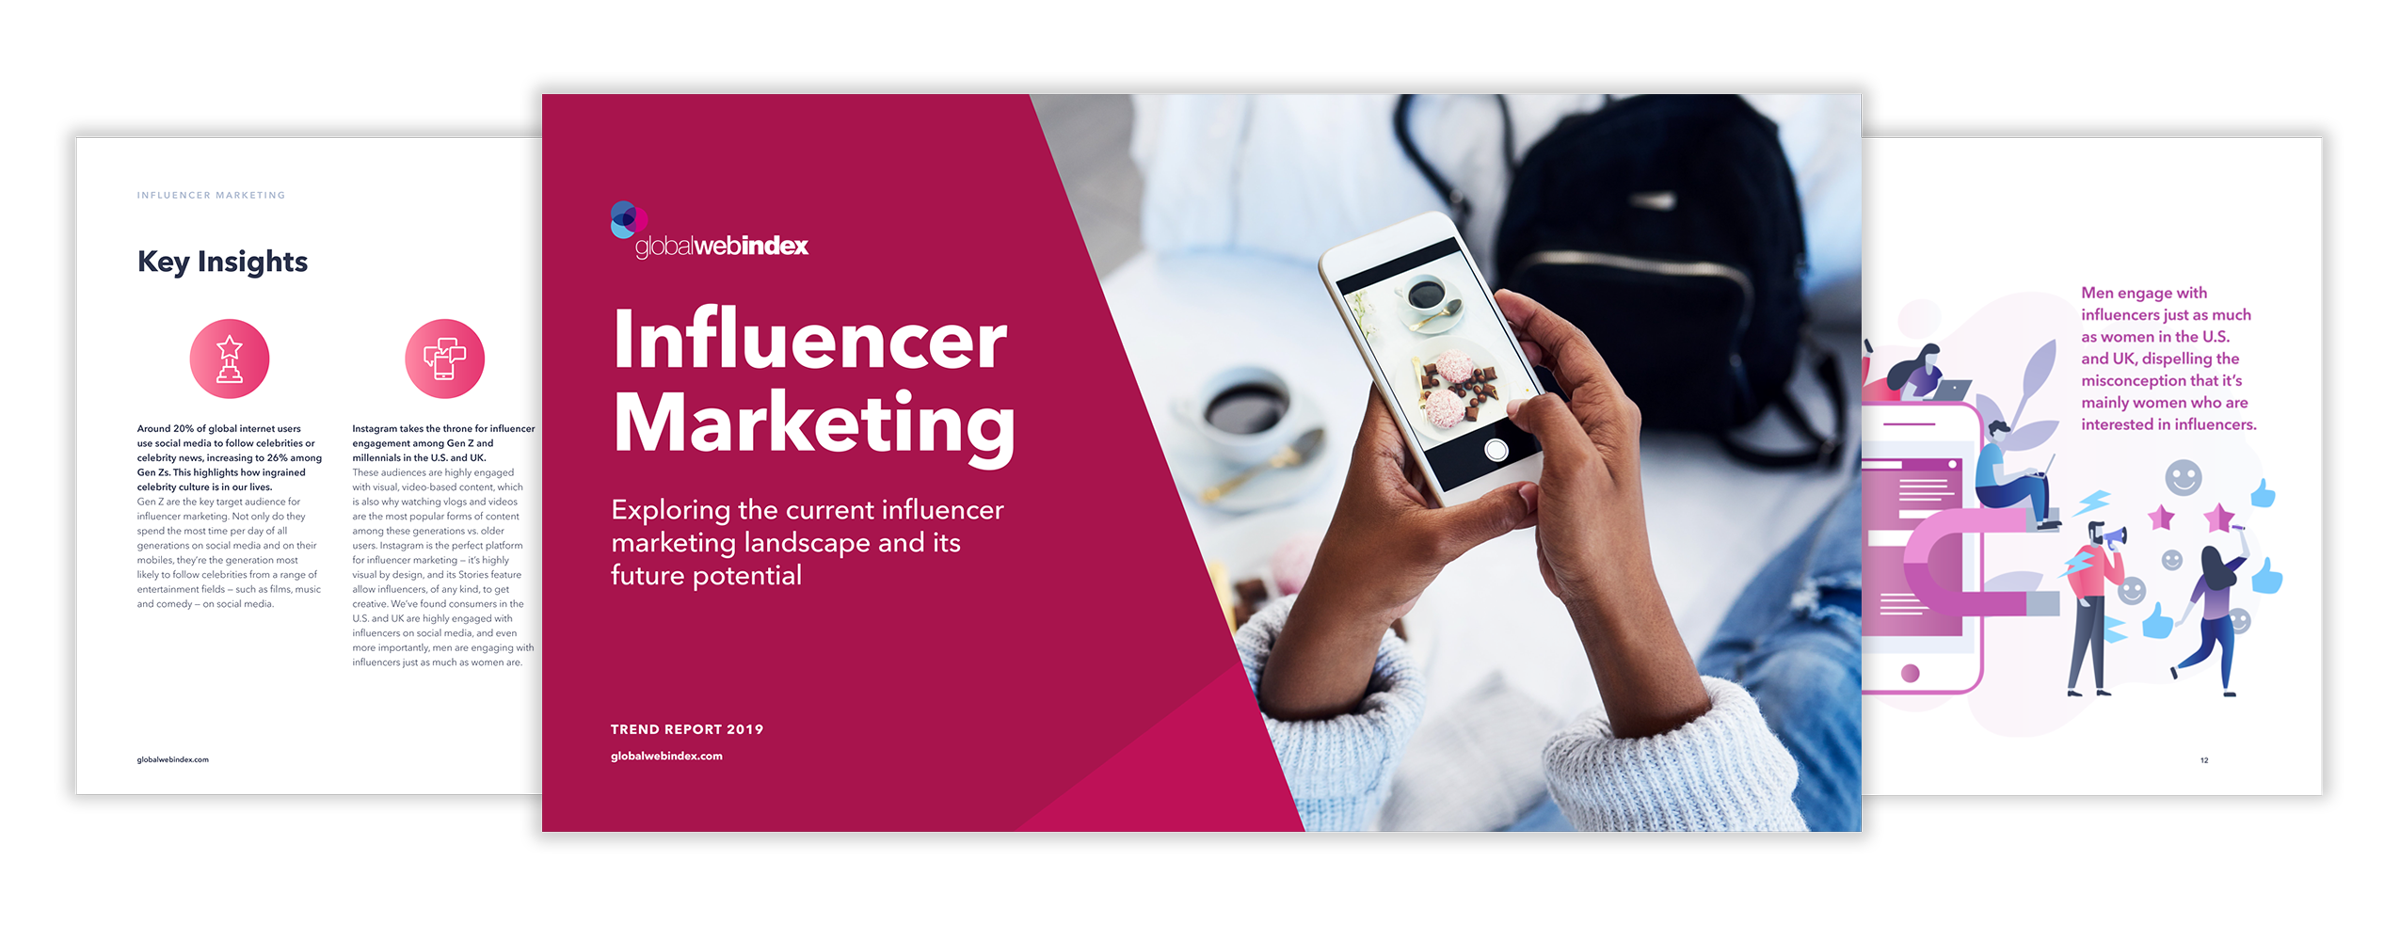 Influencer-marketing-report-preview-1200